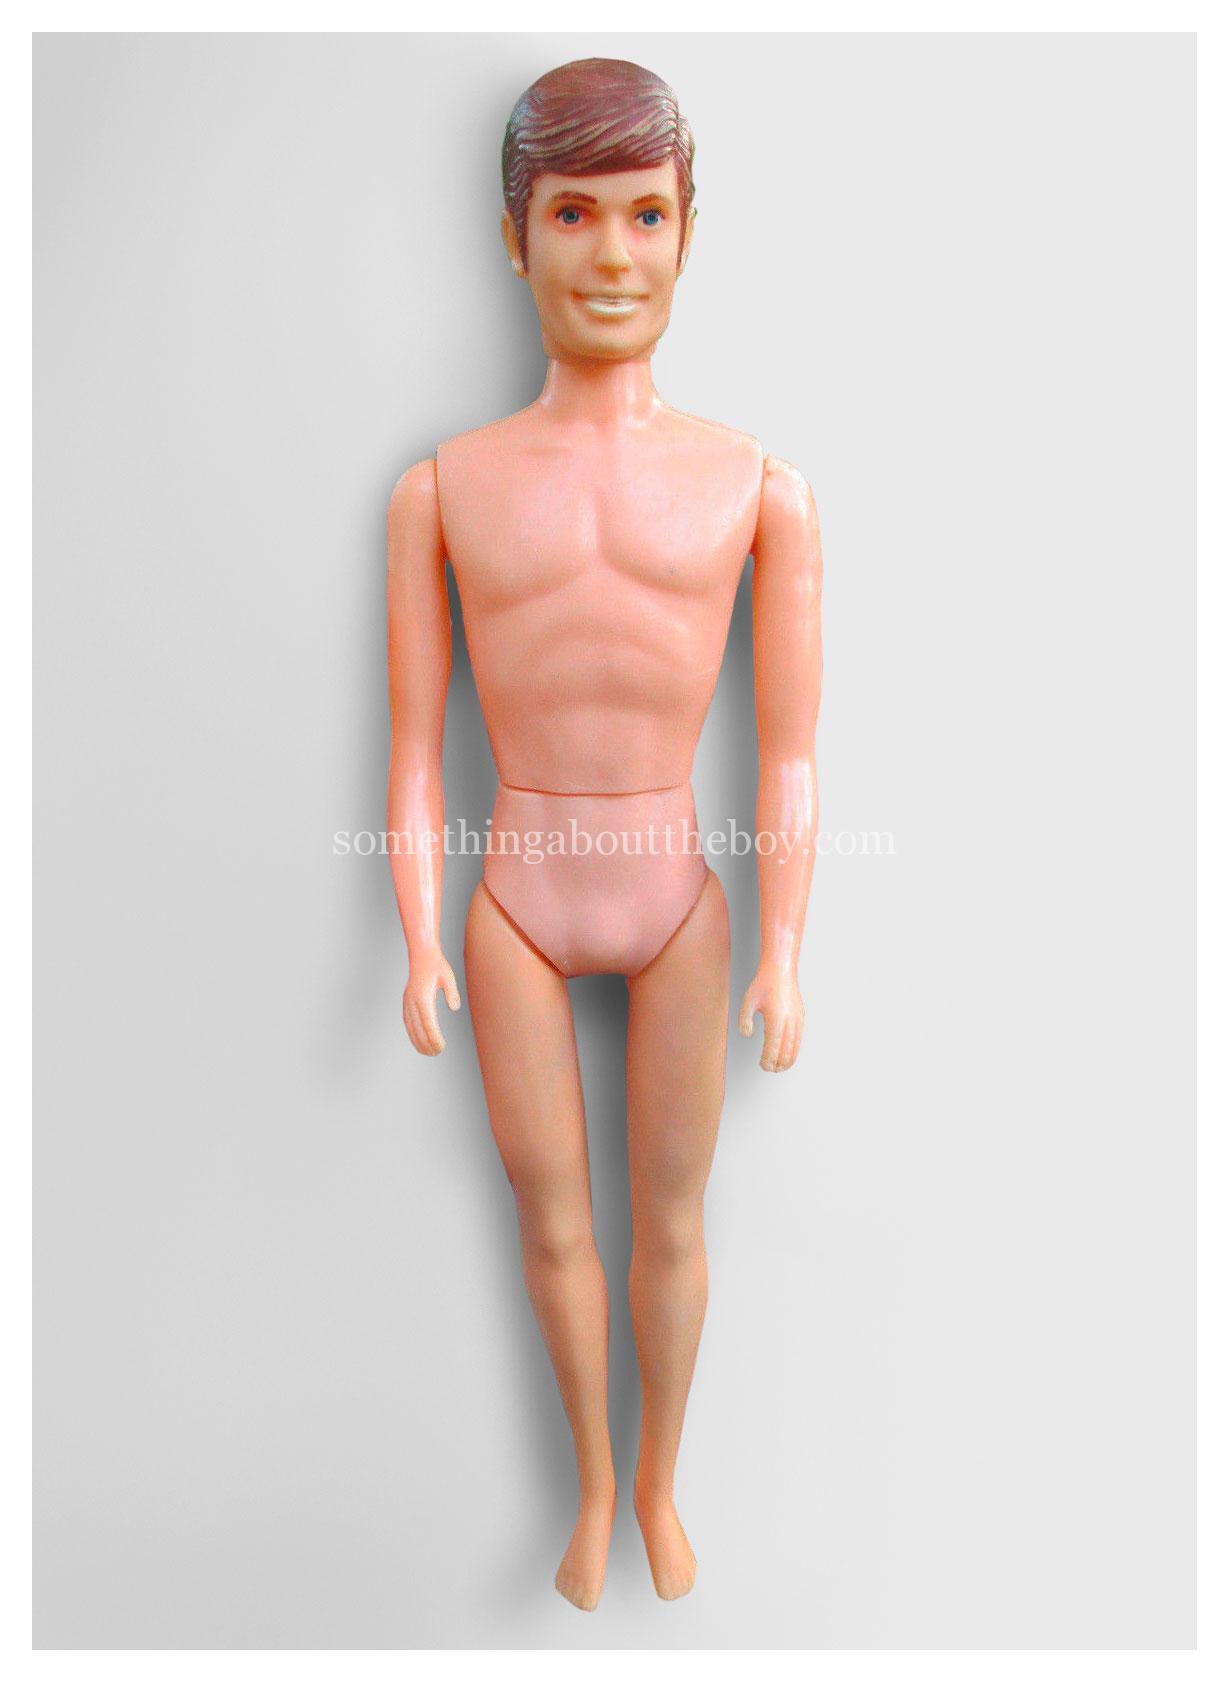 1972 JCPenney clone Boy Doll